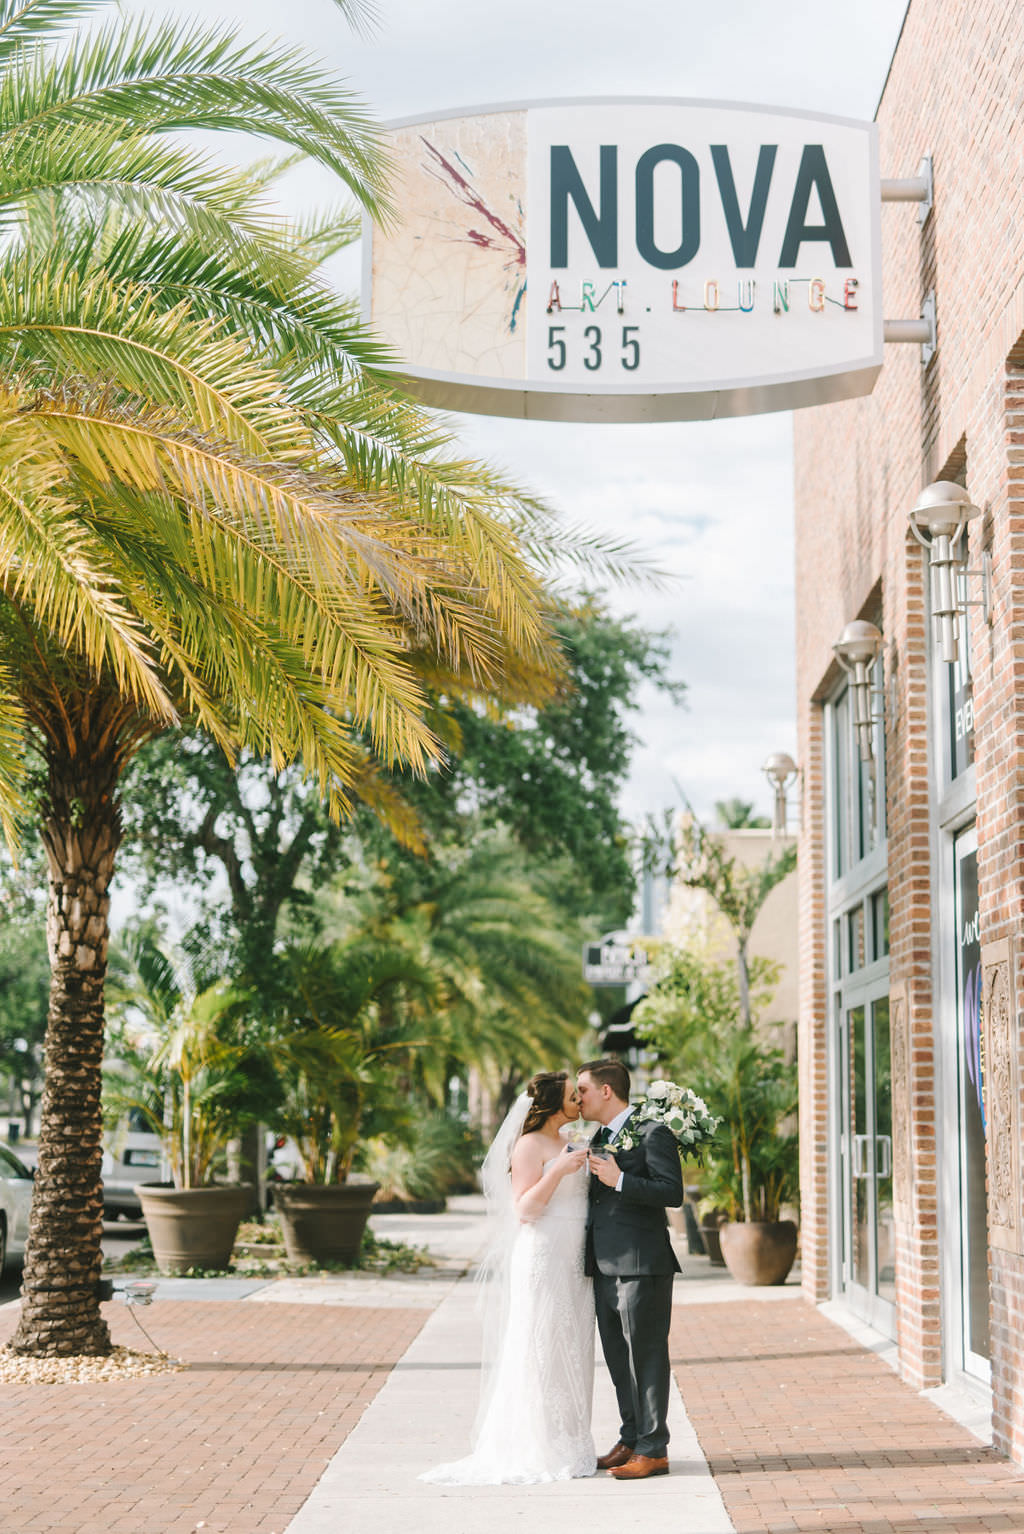 Modern Downtown St. Pete Bride and Groom Wedding Portrait | Tampa Bay Venue NOVA 535 | Tampa Bay Photographer Kera Photography